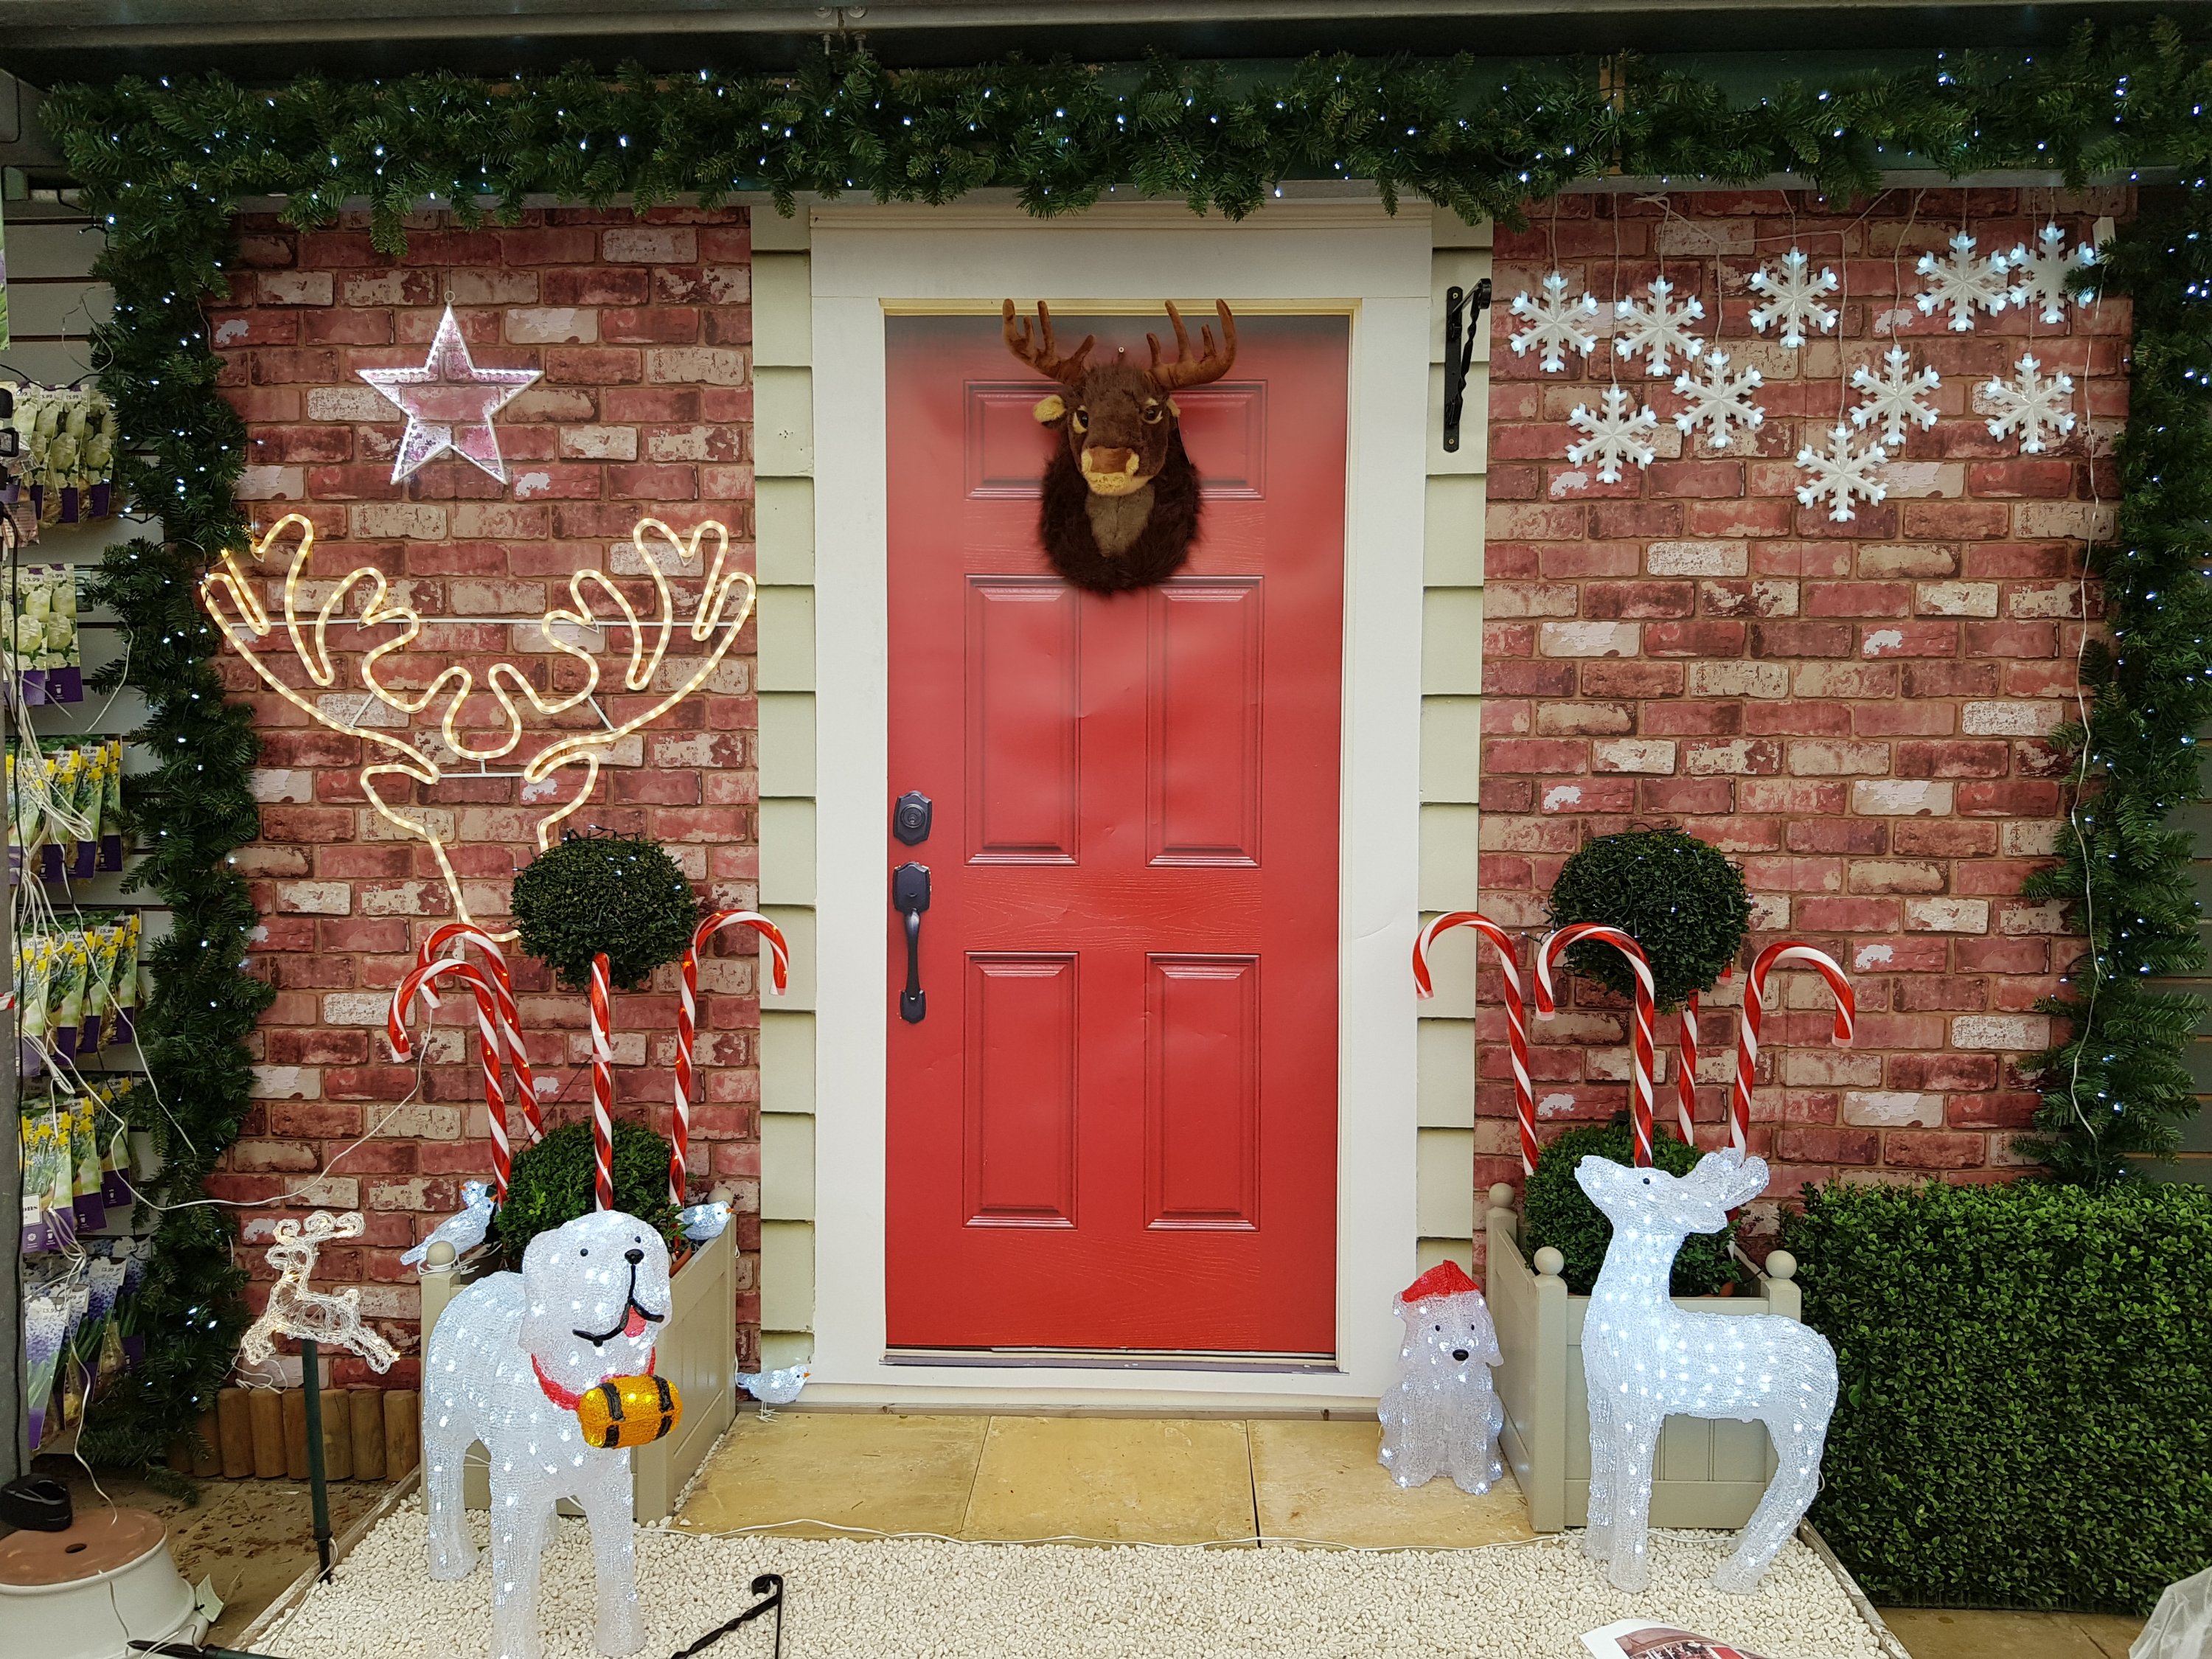 Notcutts, St Albans, Christmas door display